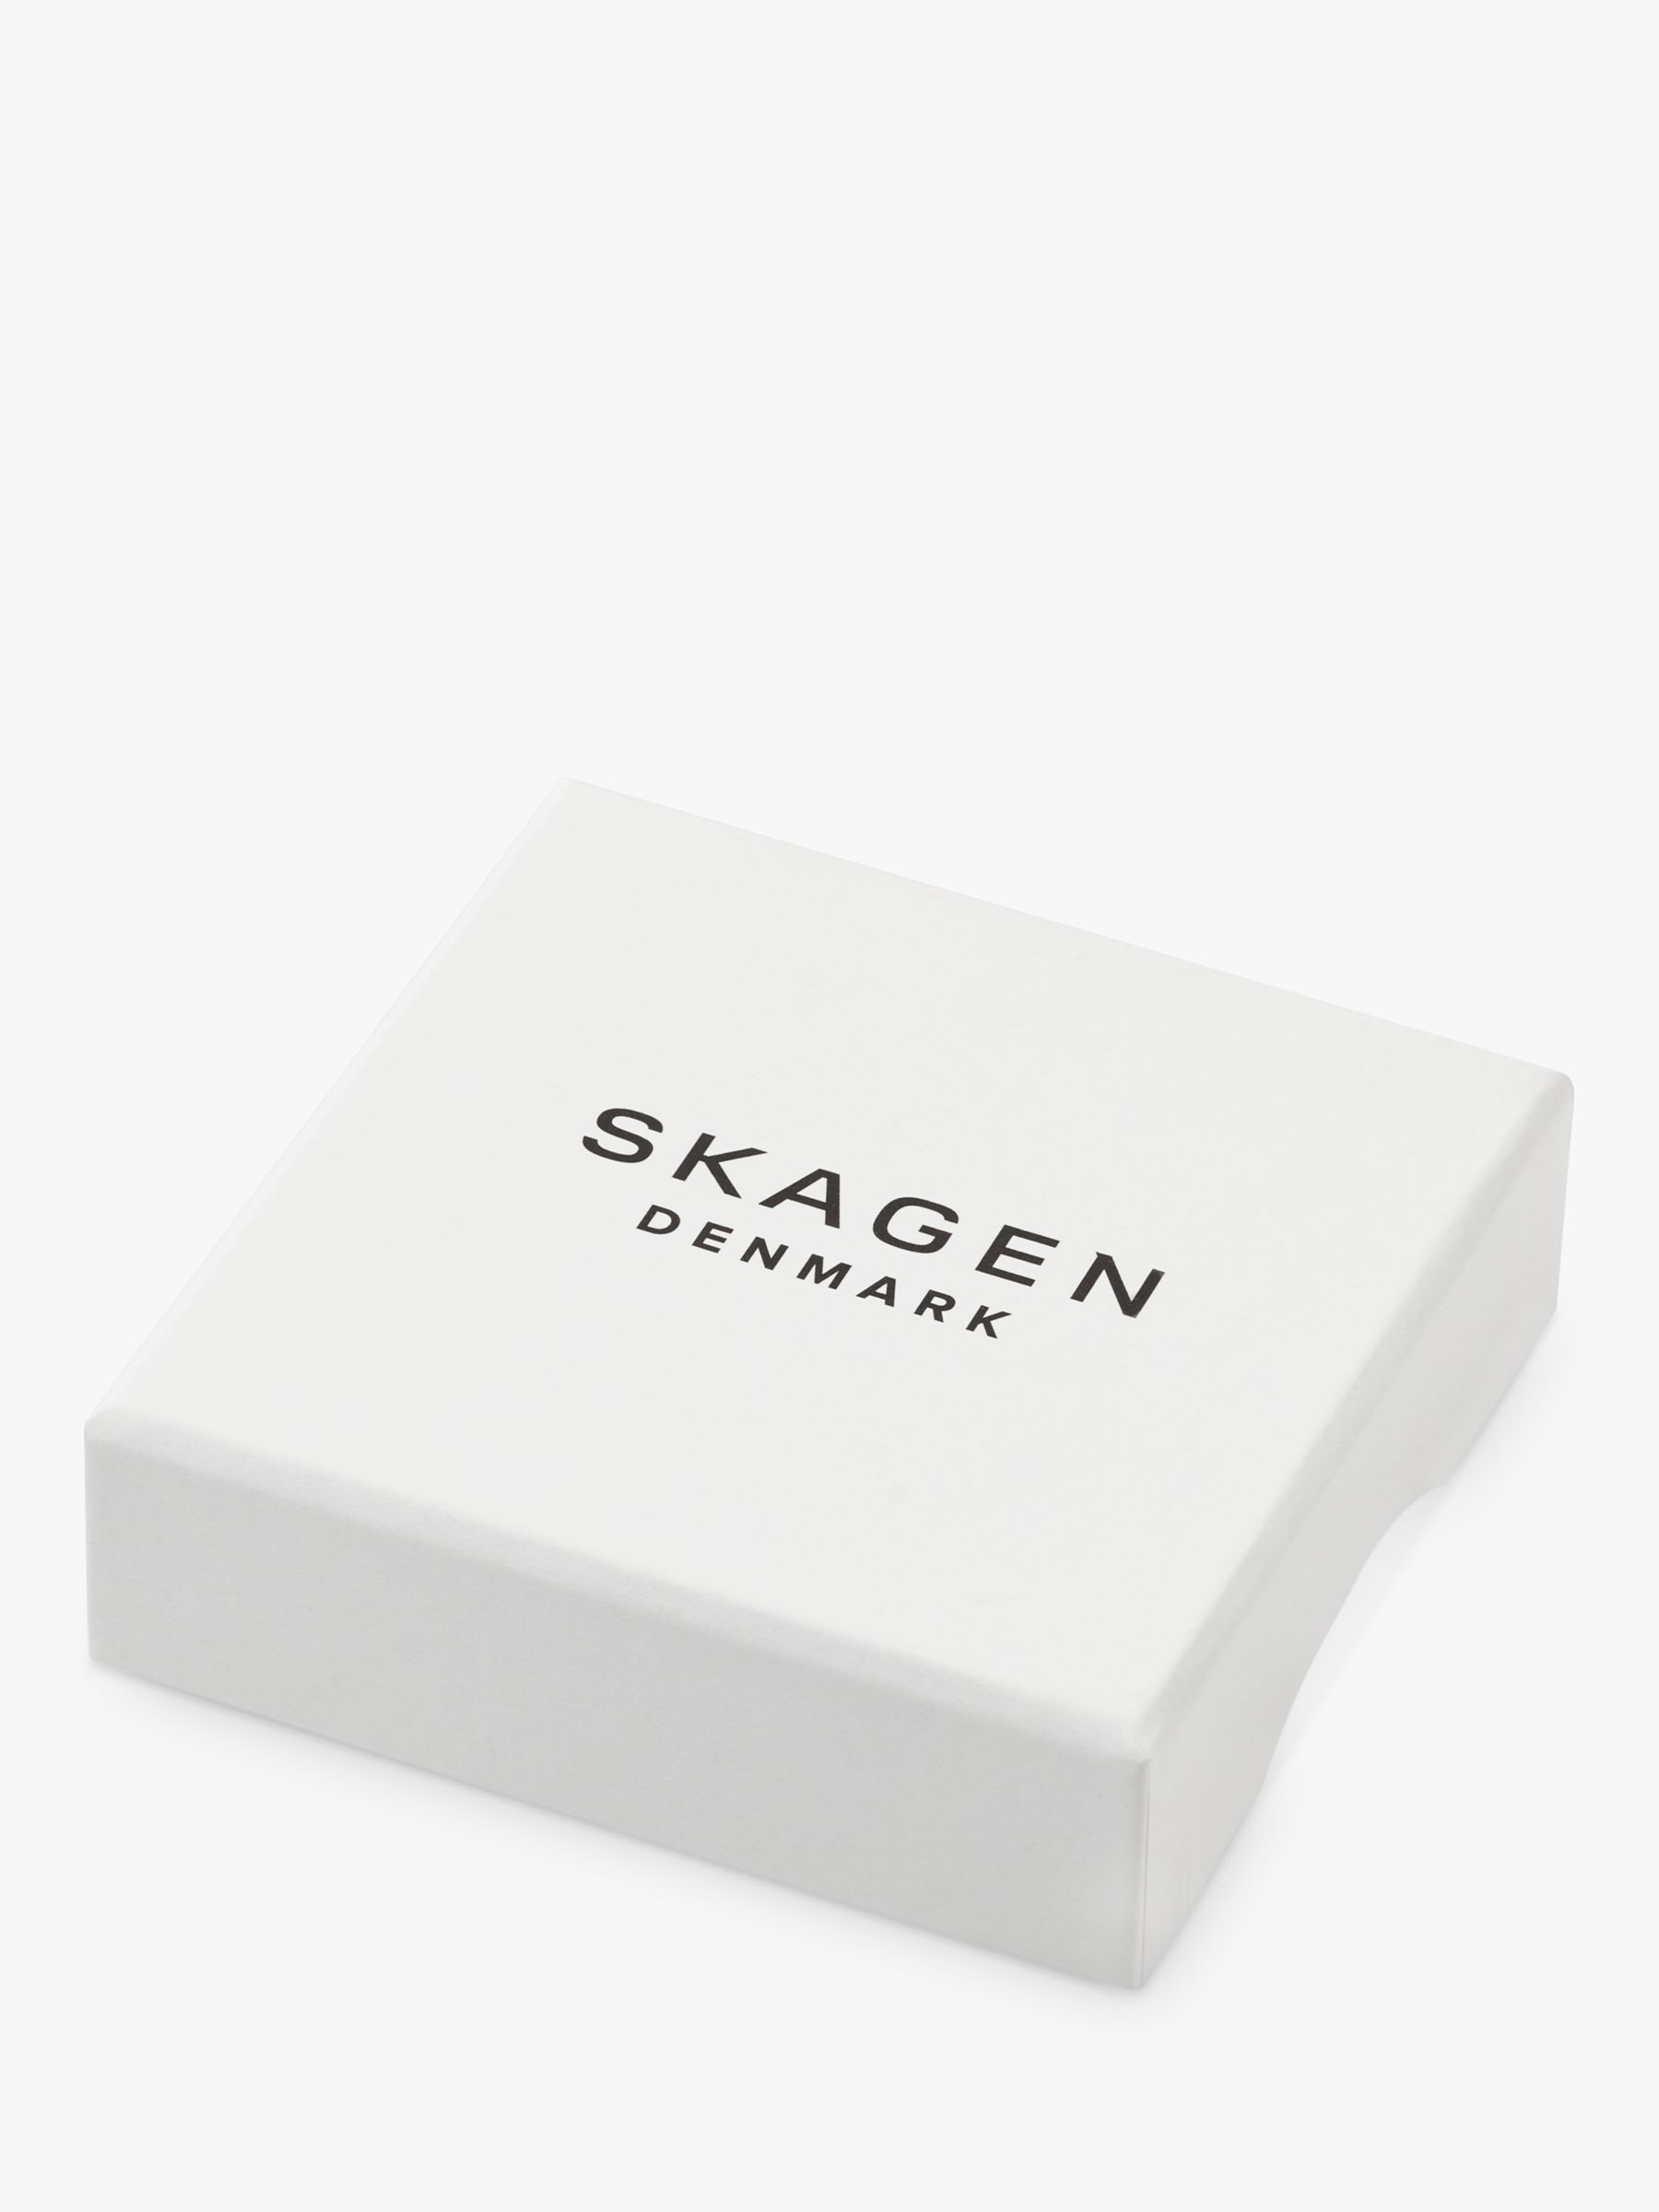 Buy Skagen Wave Glass Stud Earrings Online at johnlewis.com